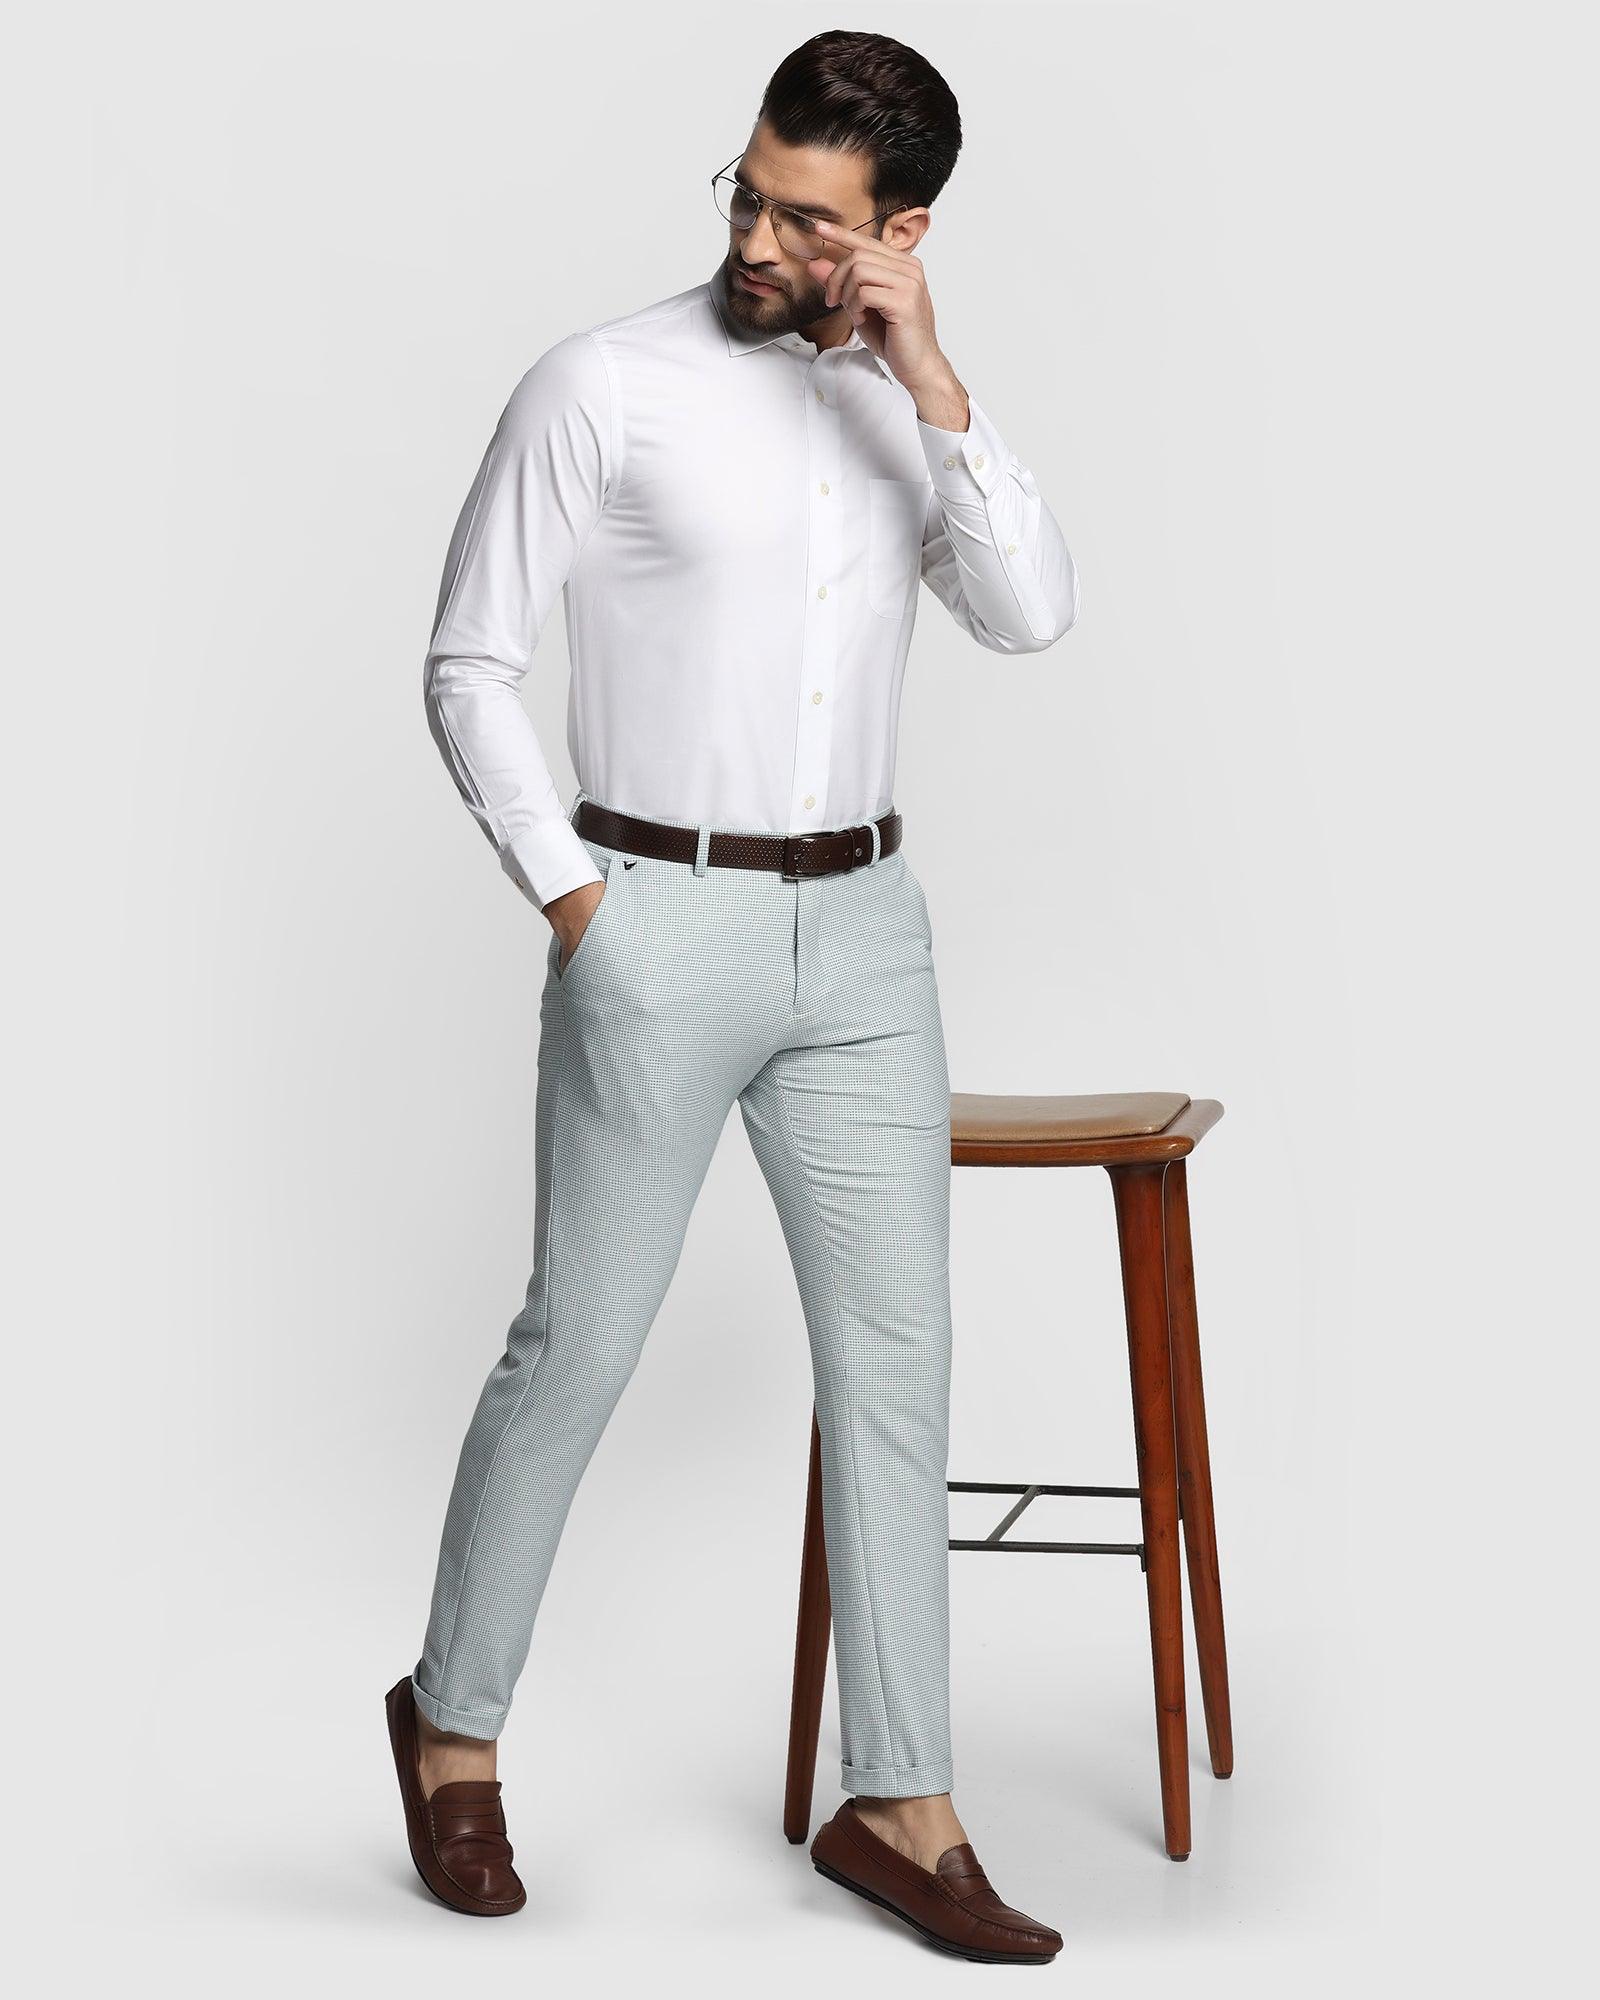 Luxe Formal White Textured Shirt - Bolten